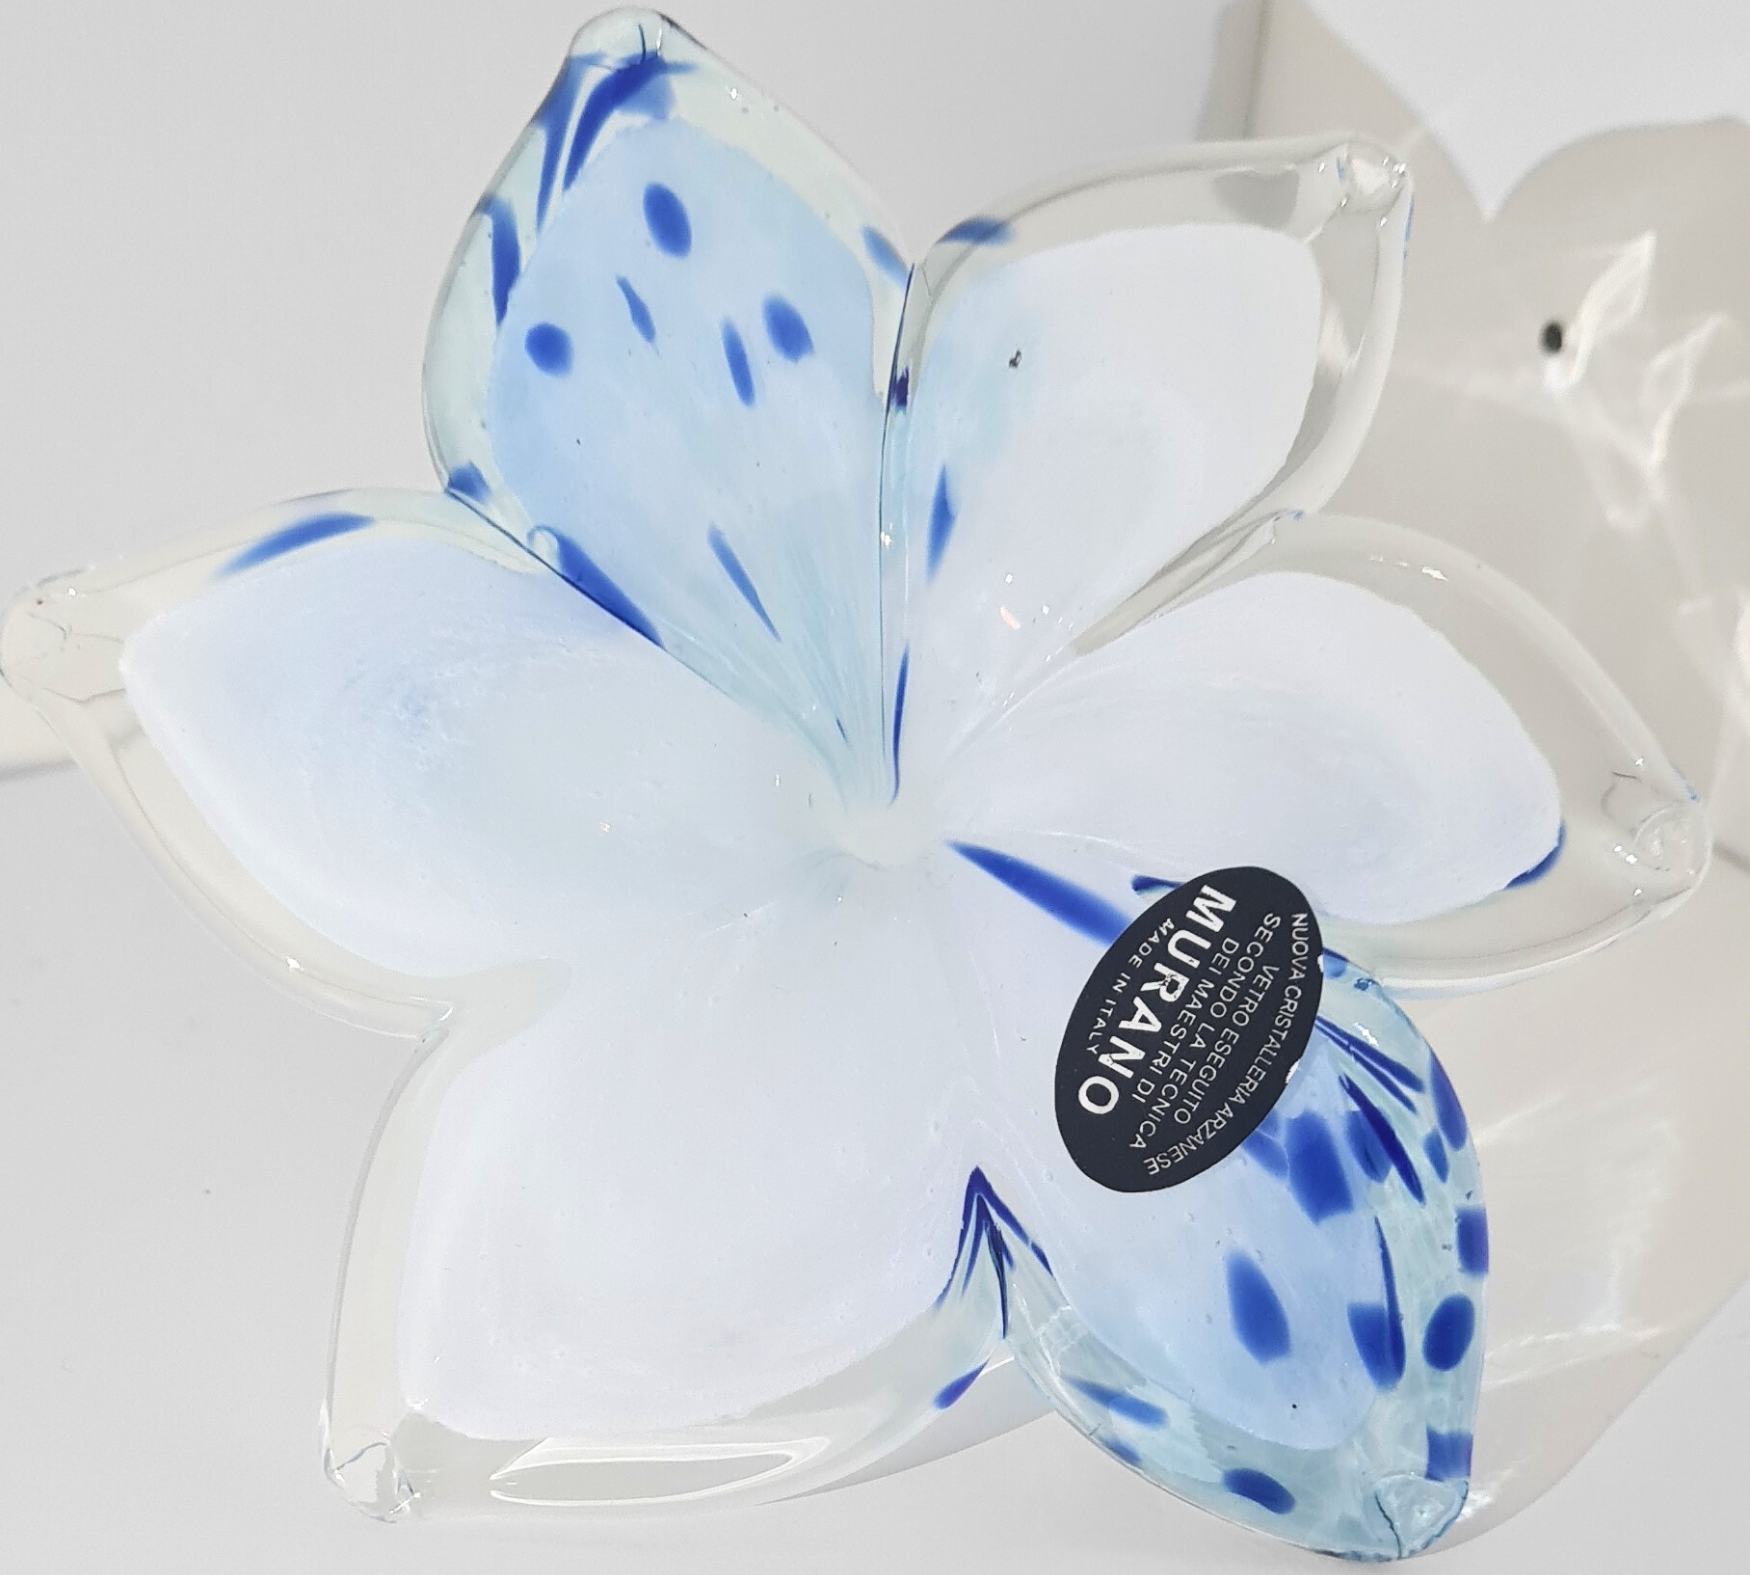 Blüte Dekorationselement Muranoglas Blau Weiß 0